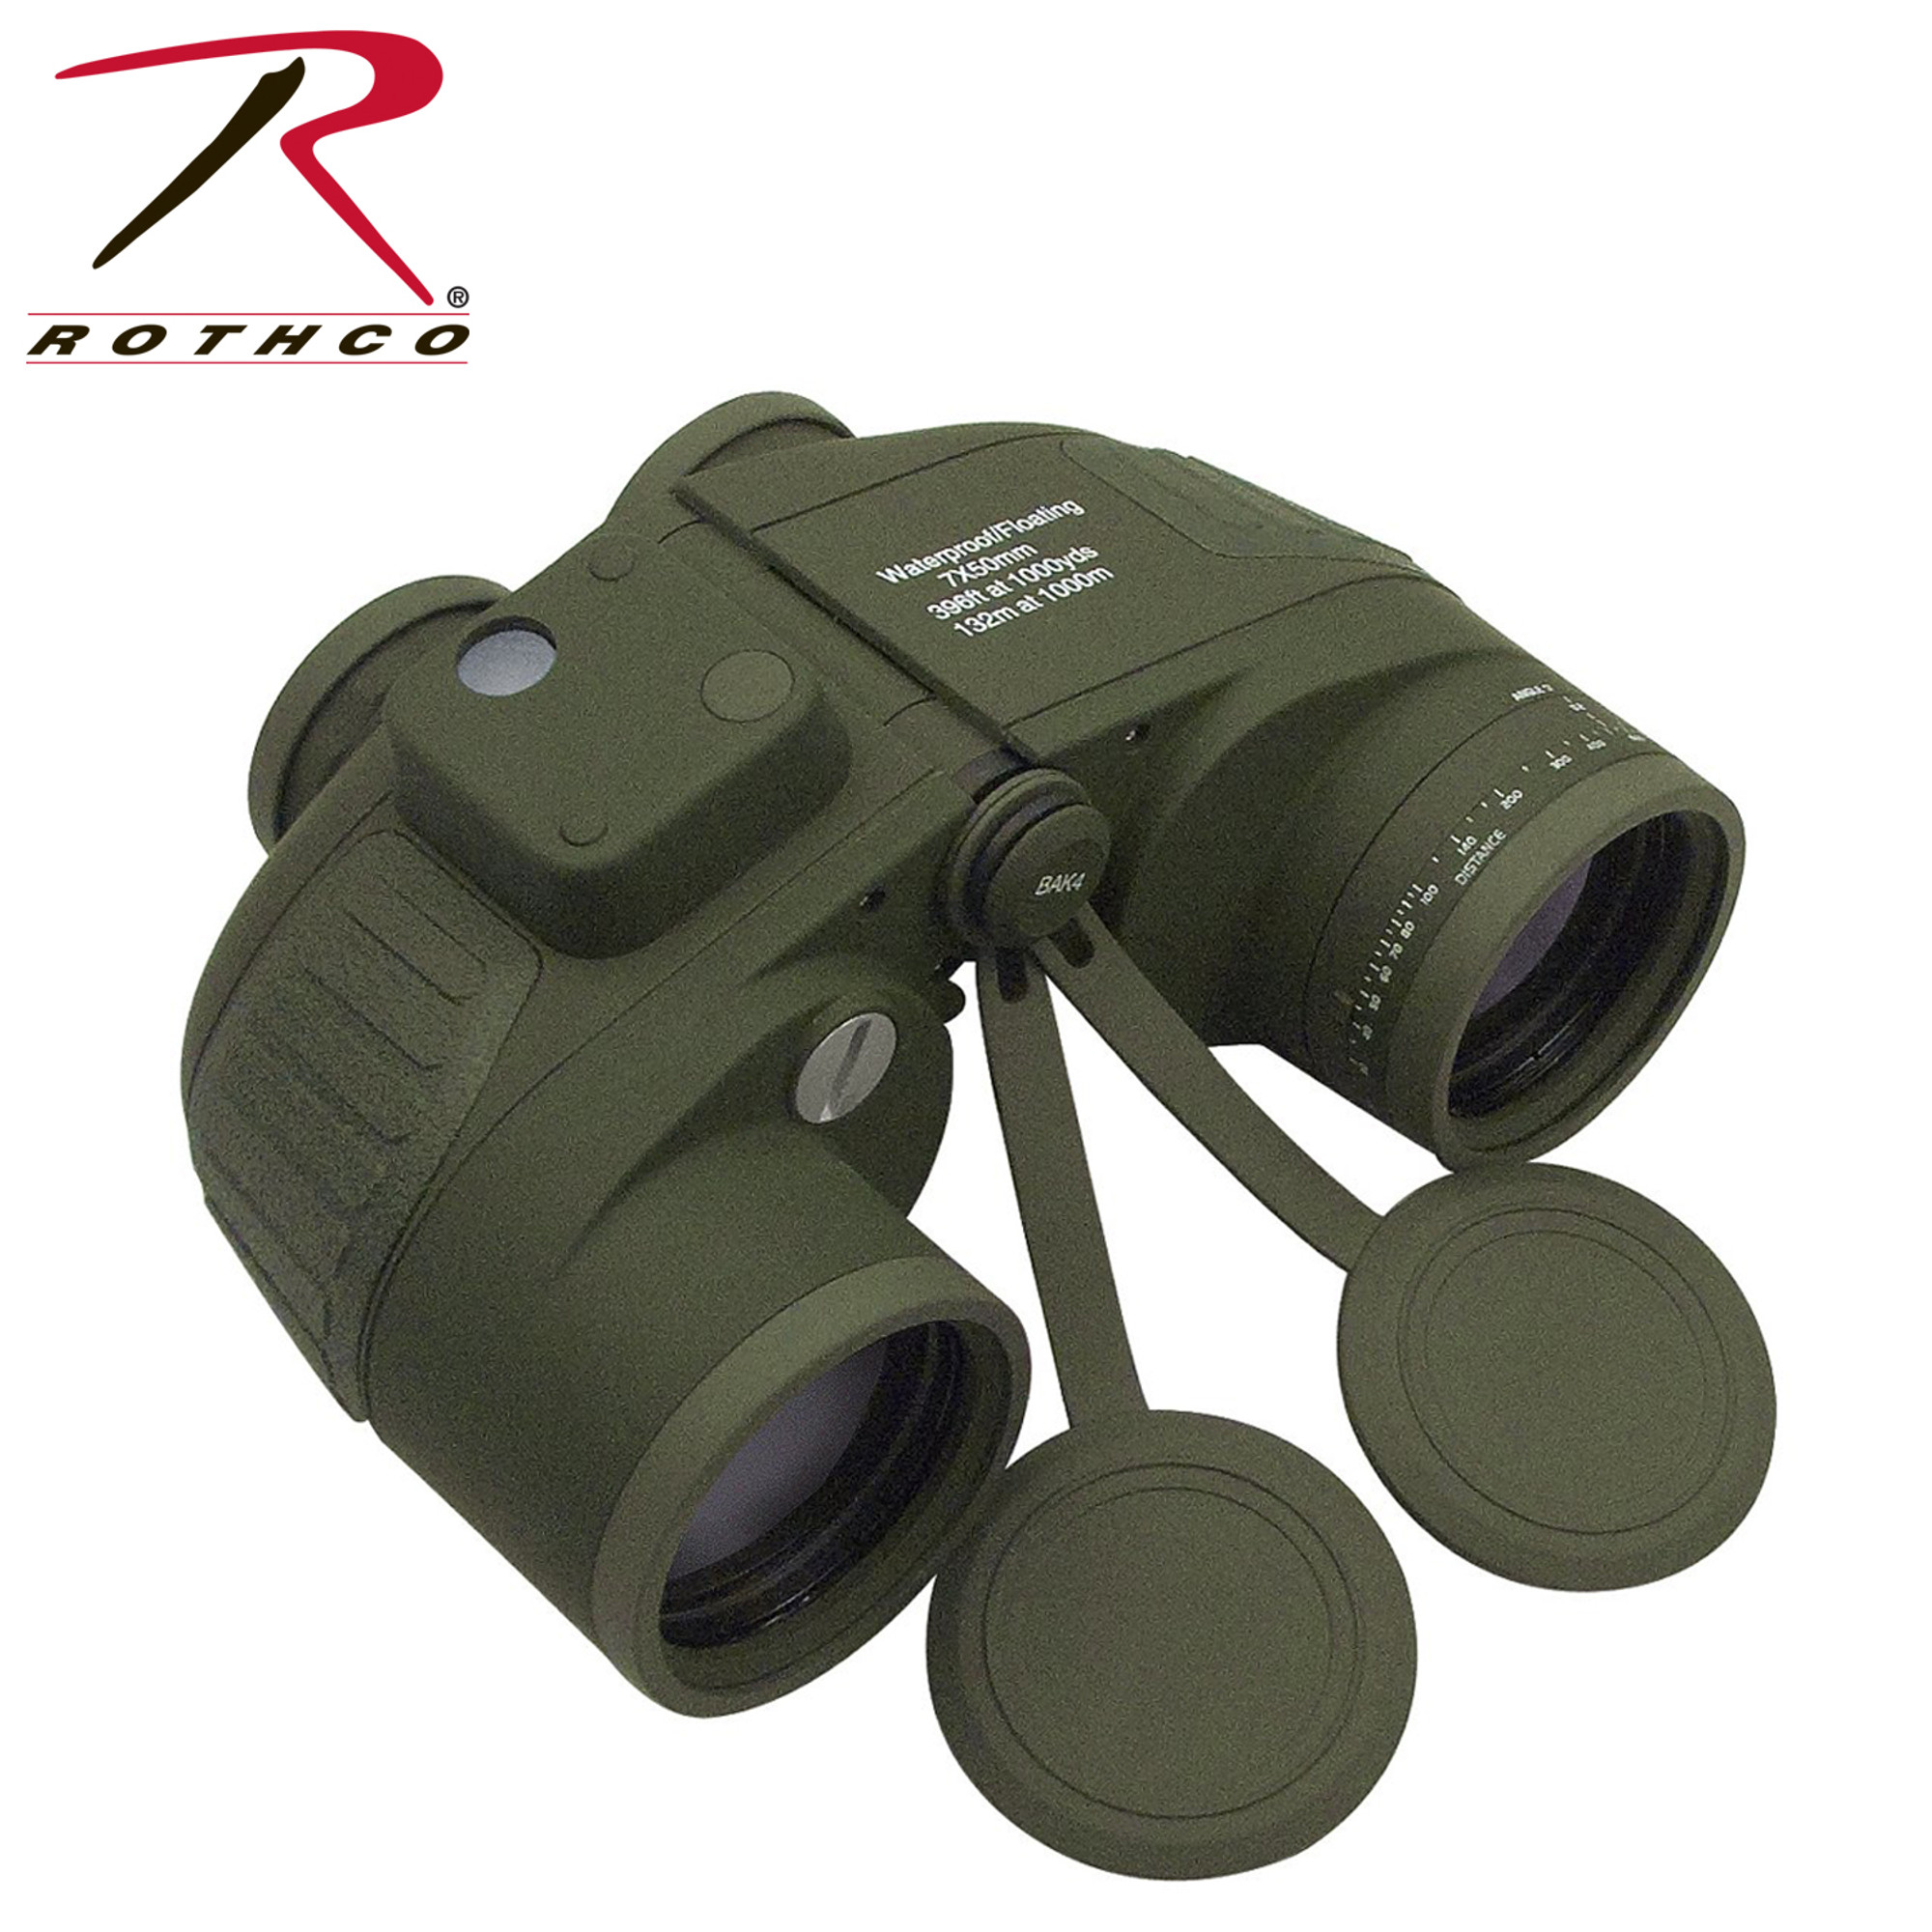 Rothco Military Type 7 x 50MM Binoculars - Olive Drab